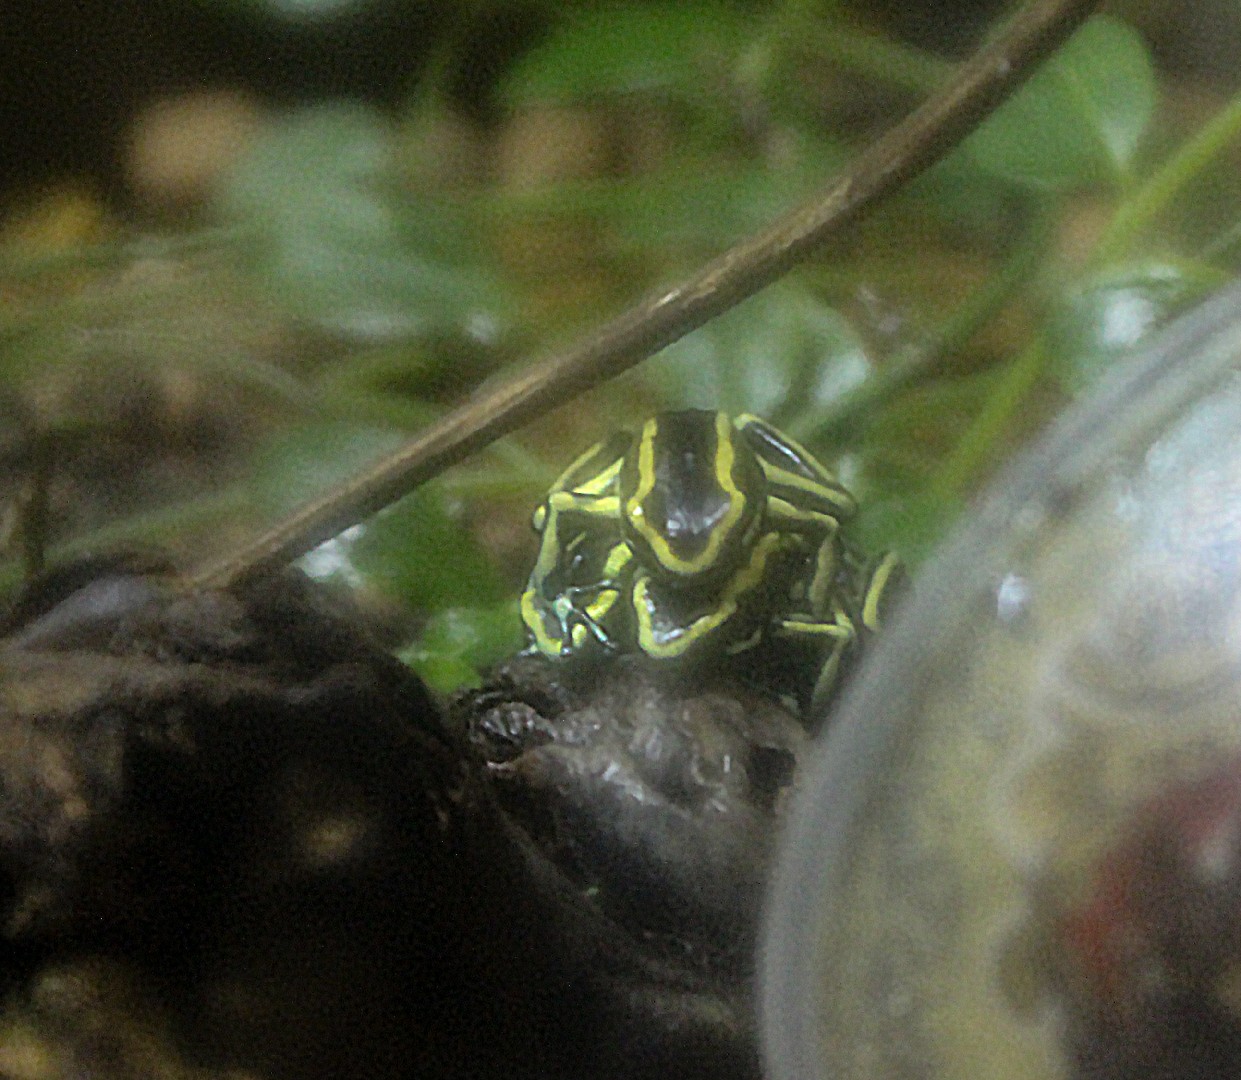 Poison dart frogs (Dendrobates)